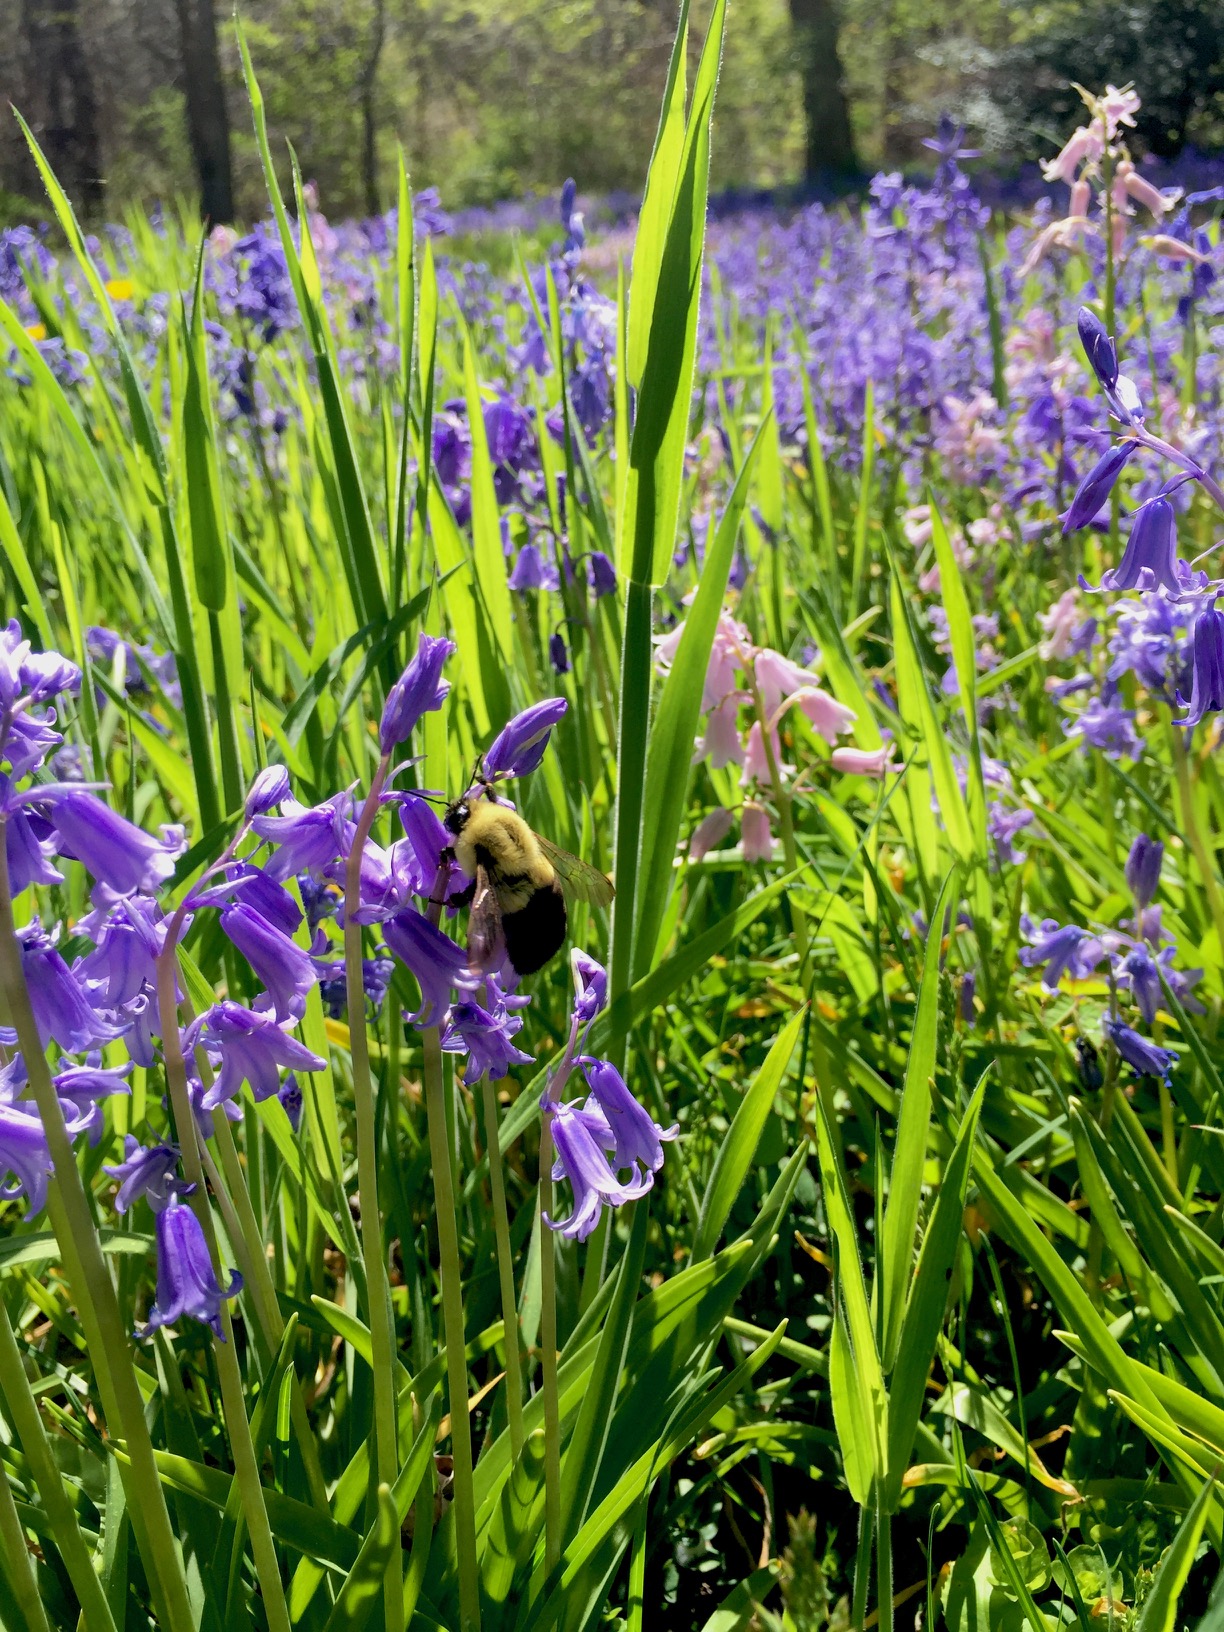 Bumblebee on Wild Irises